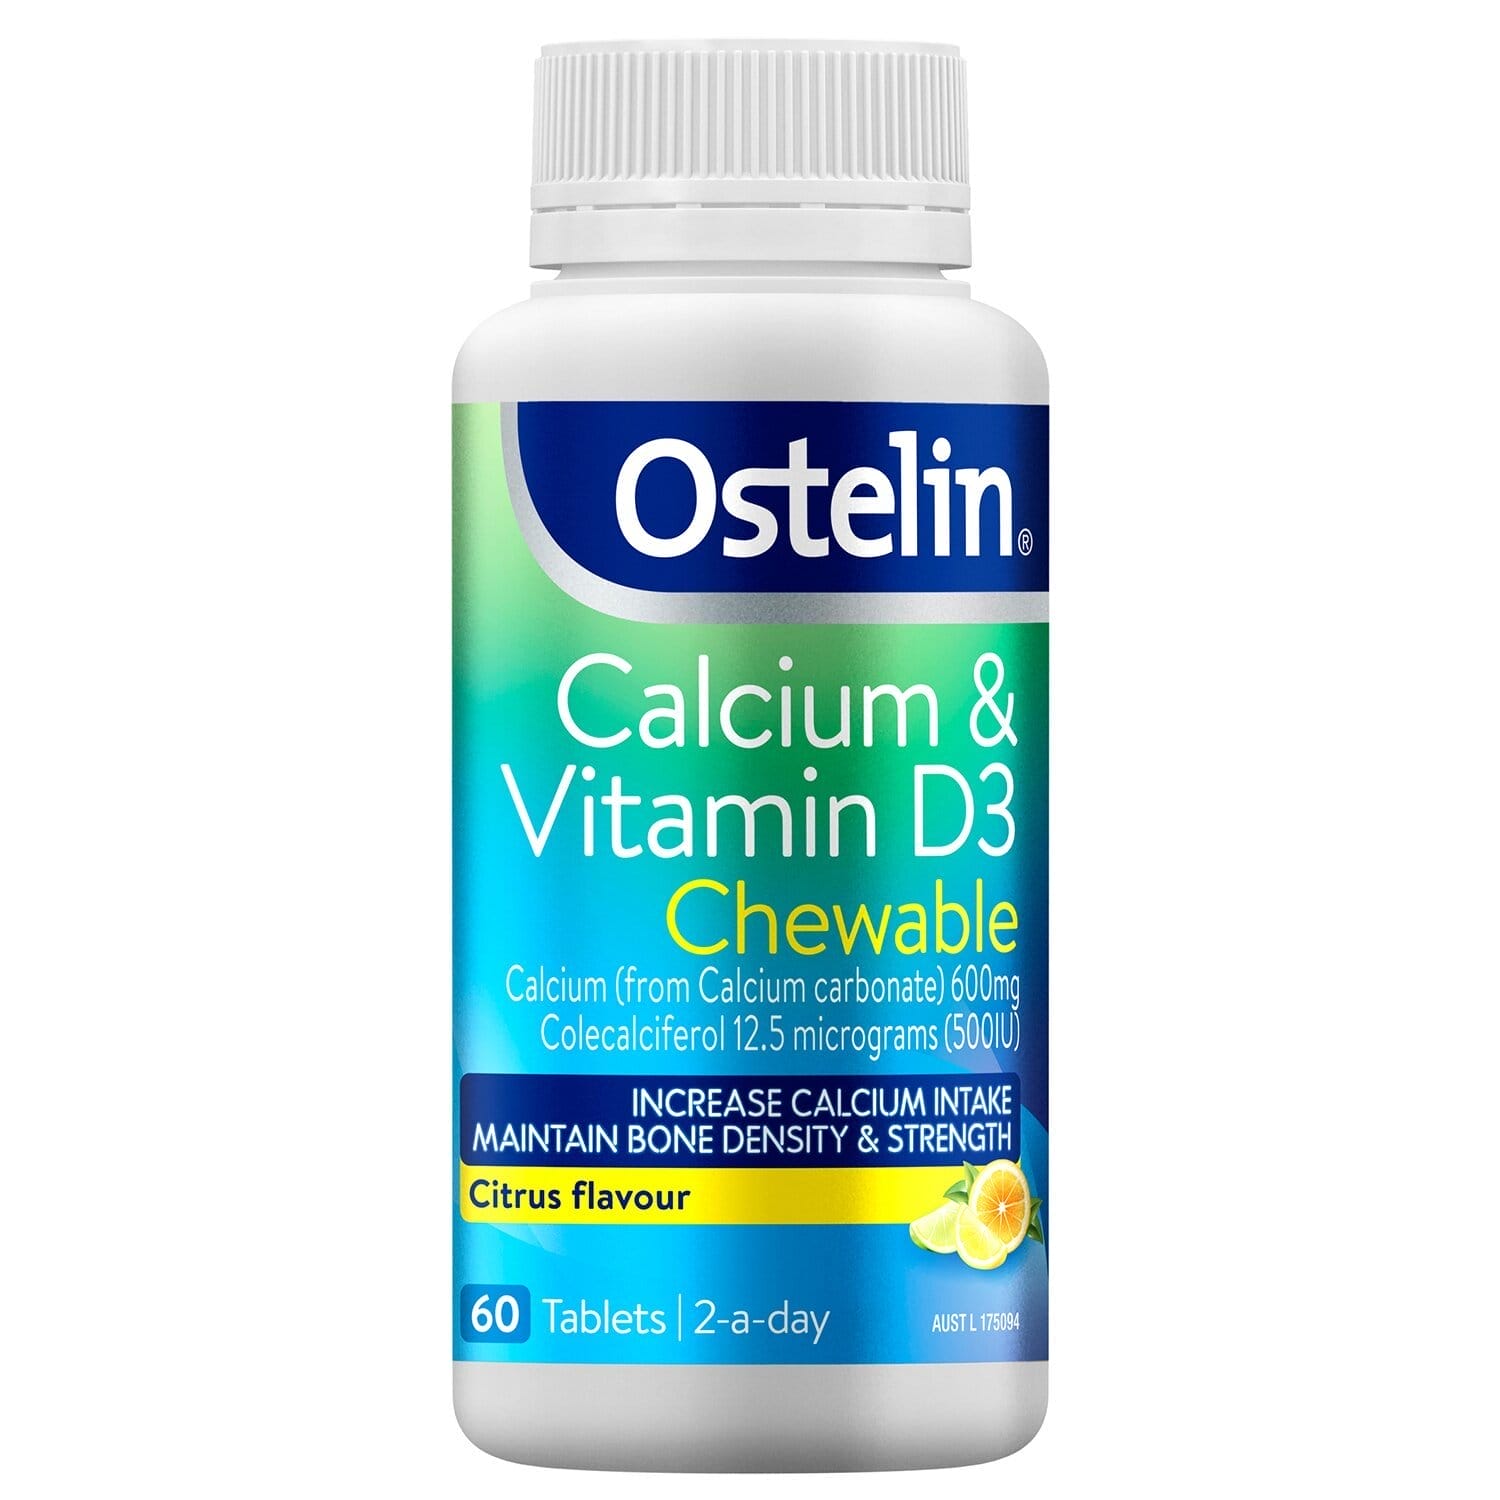 Image of [Authorized Sales Agent] Ostelin Calcium & Vitamin D Chewable - 60 Tablets 60pcs/box